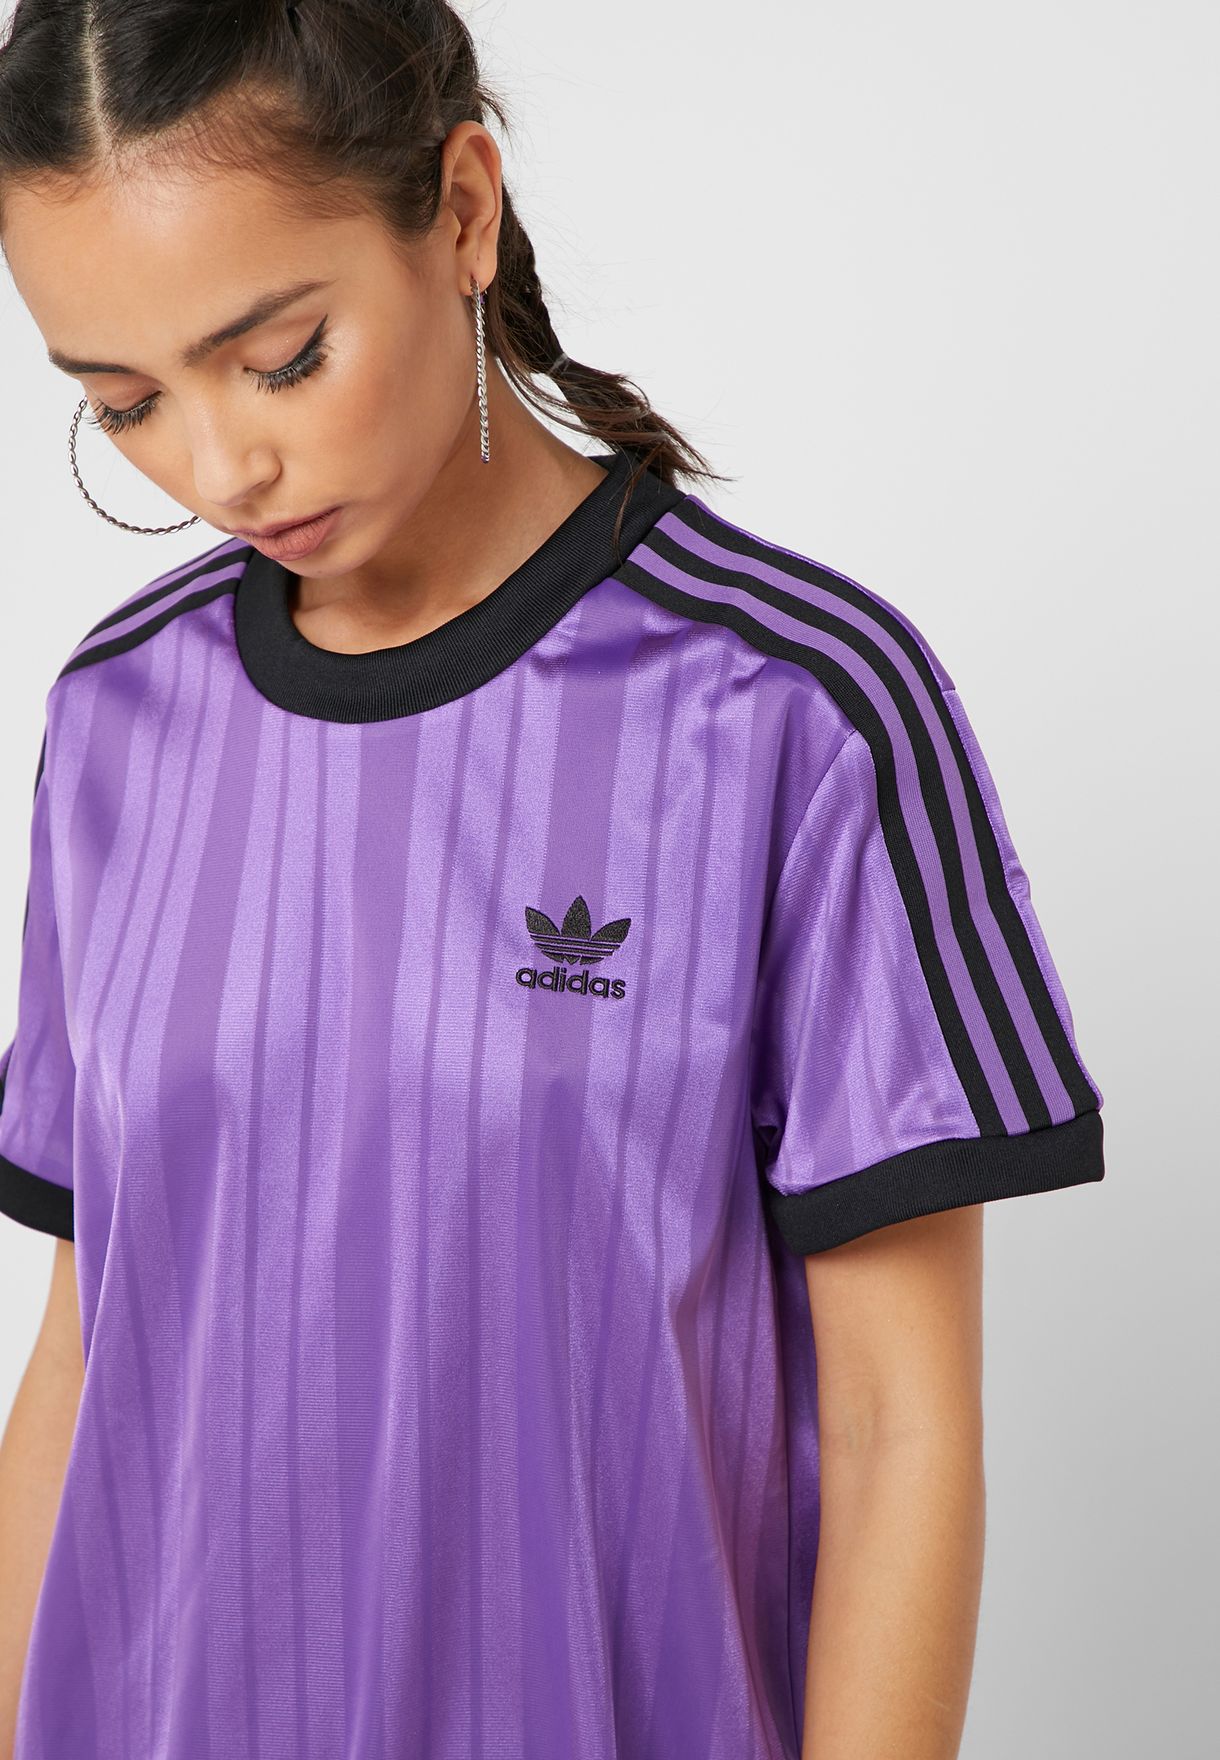 adidas purple shirt